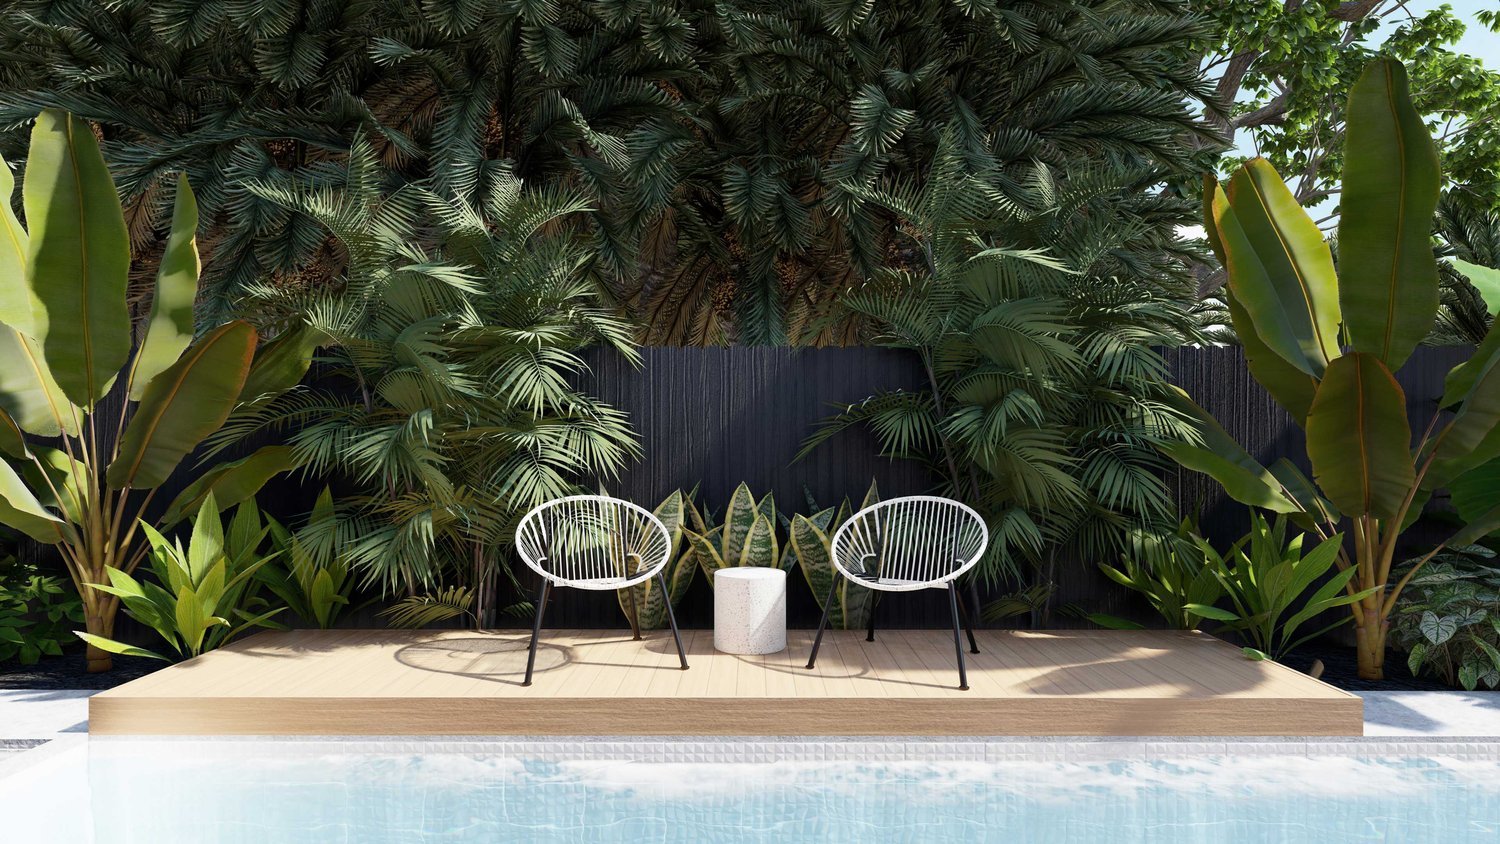 Tropical planting style in Surfside, Florida back yard design